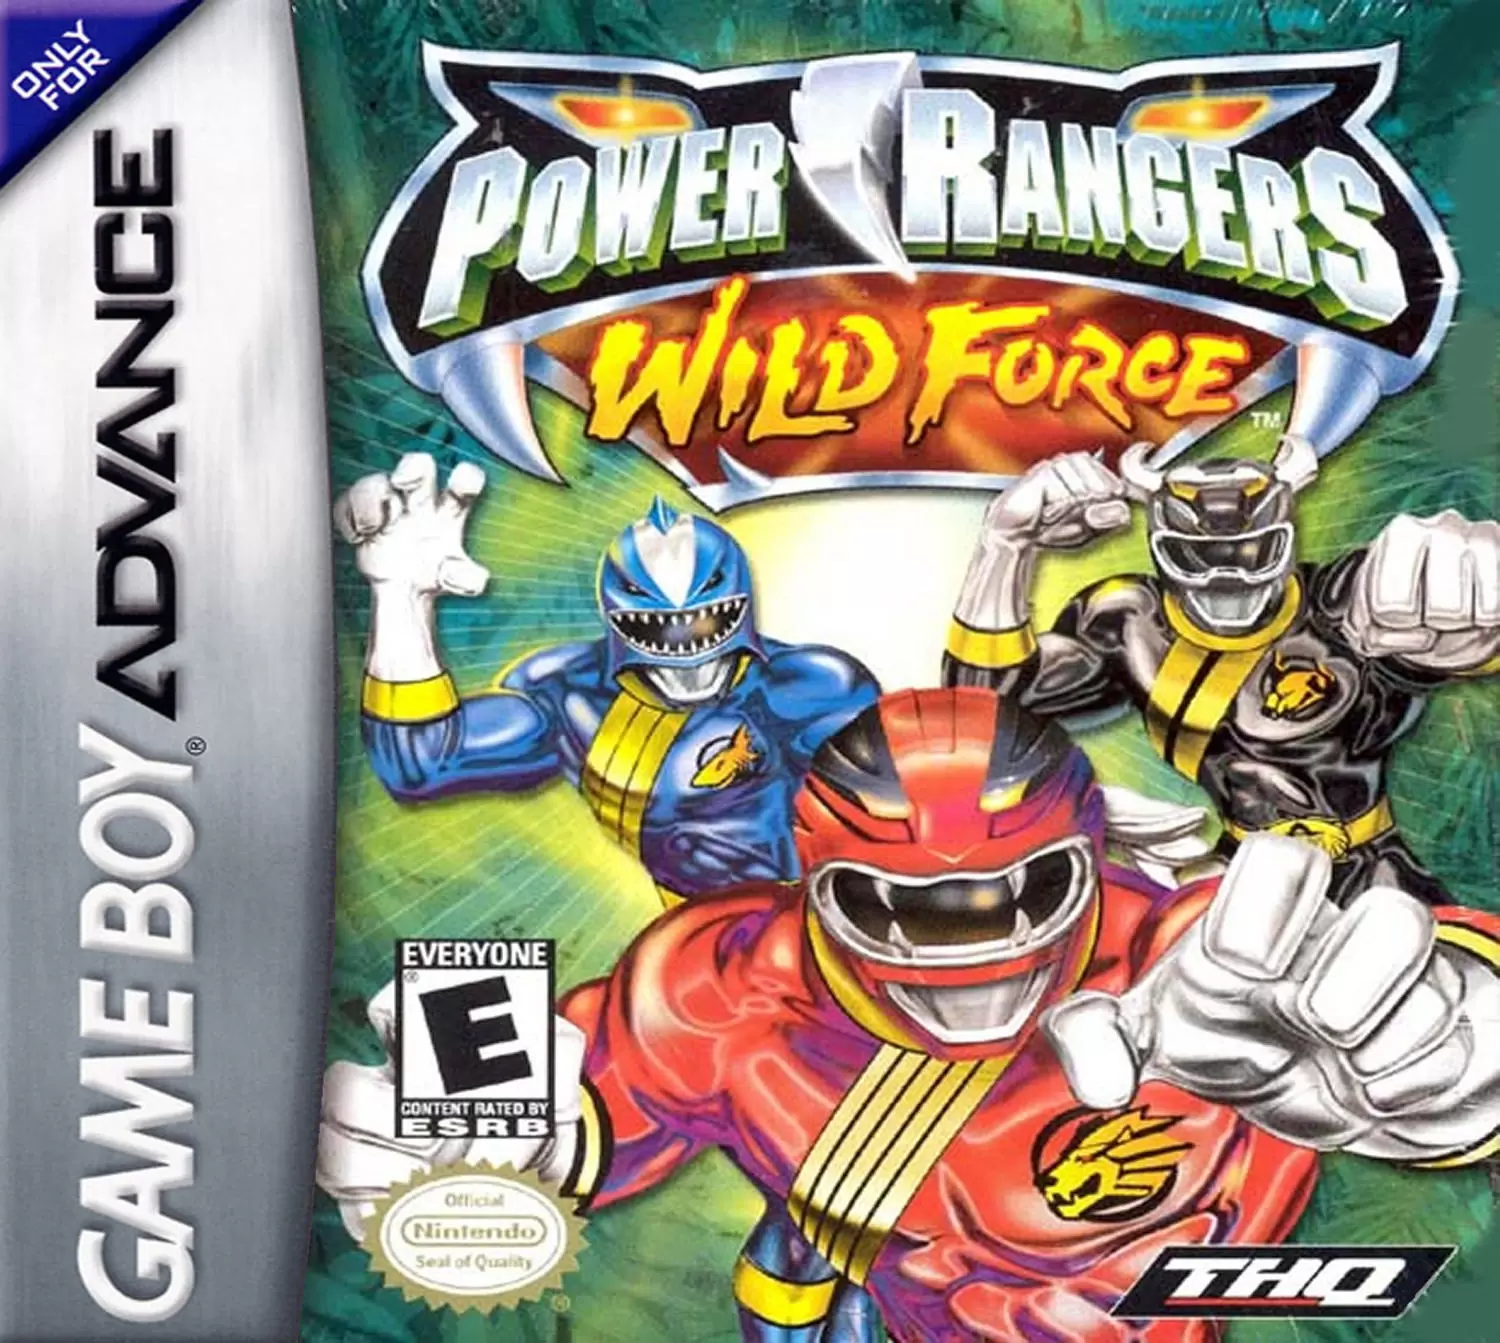 Game Boy Advance Games - Power Rangers: Wild Force